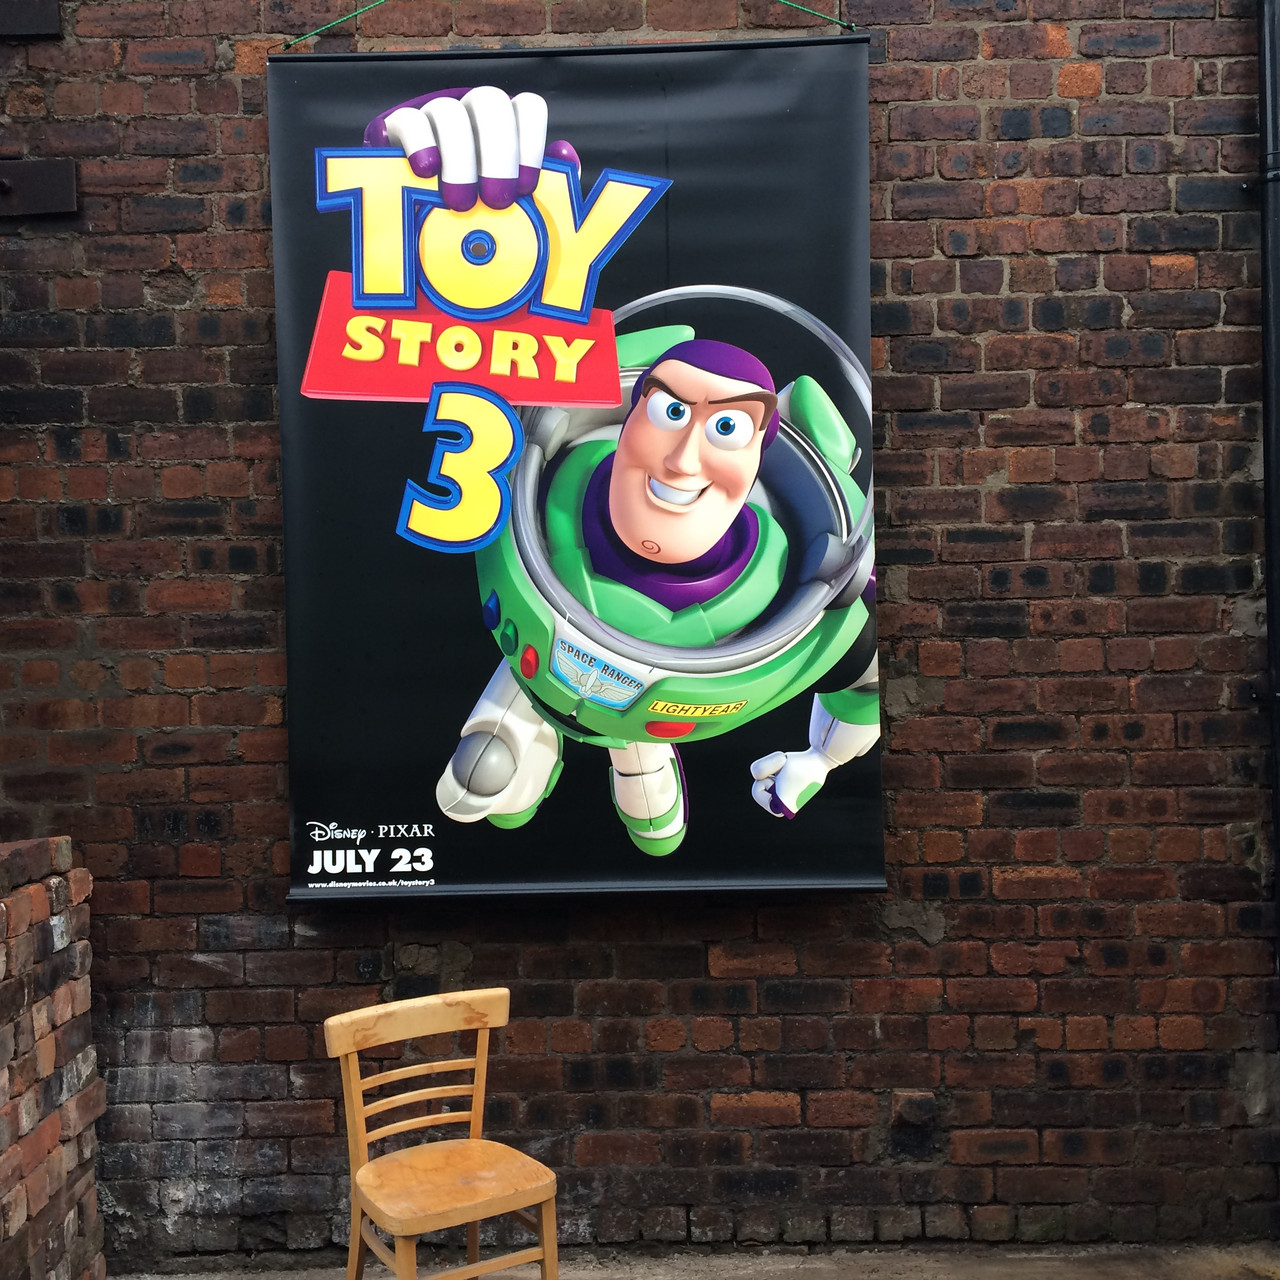 Toy Story 3 (Disney Pixar 2010) HUGE Cinema Foyer poster featuring Buzz ...